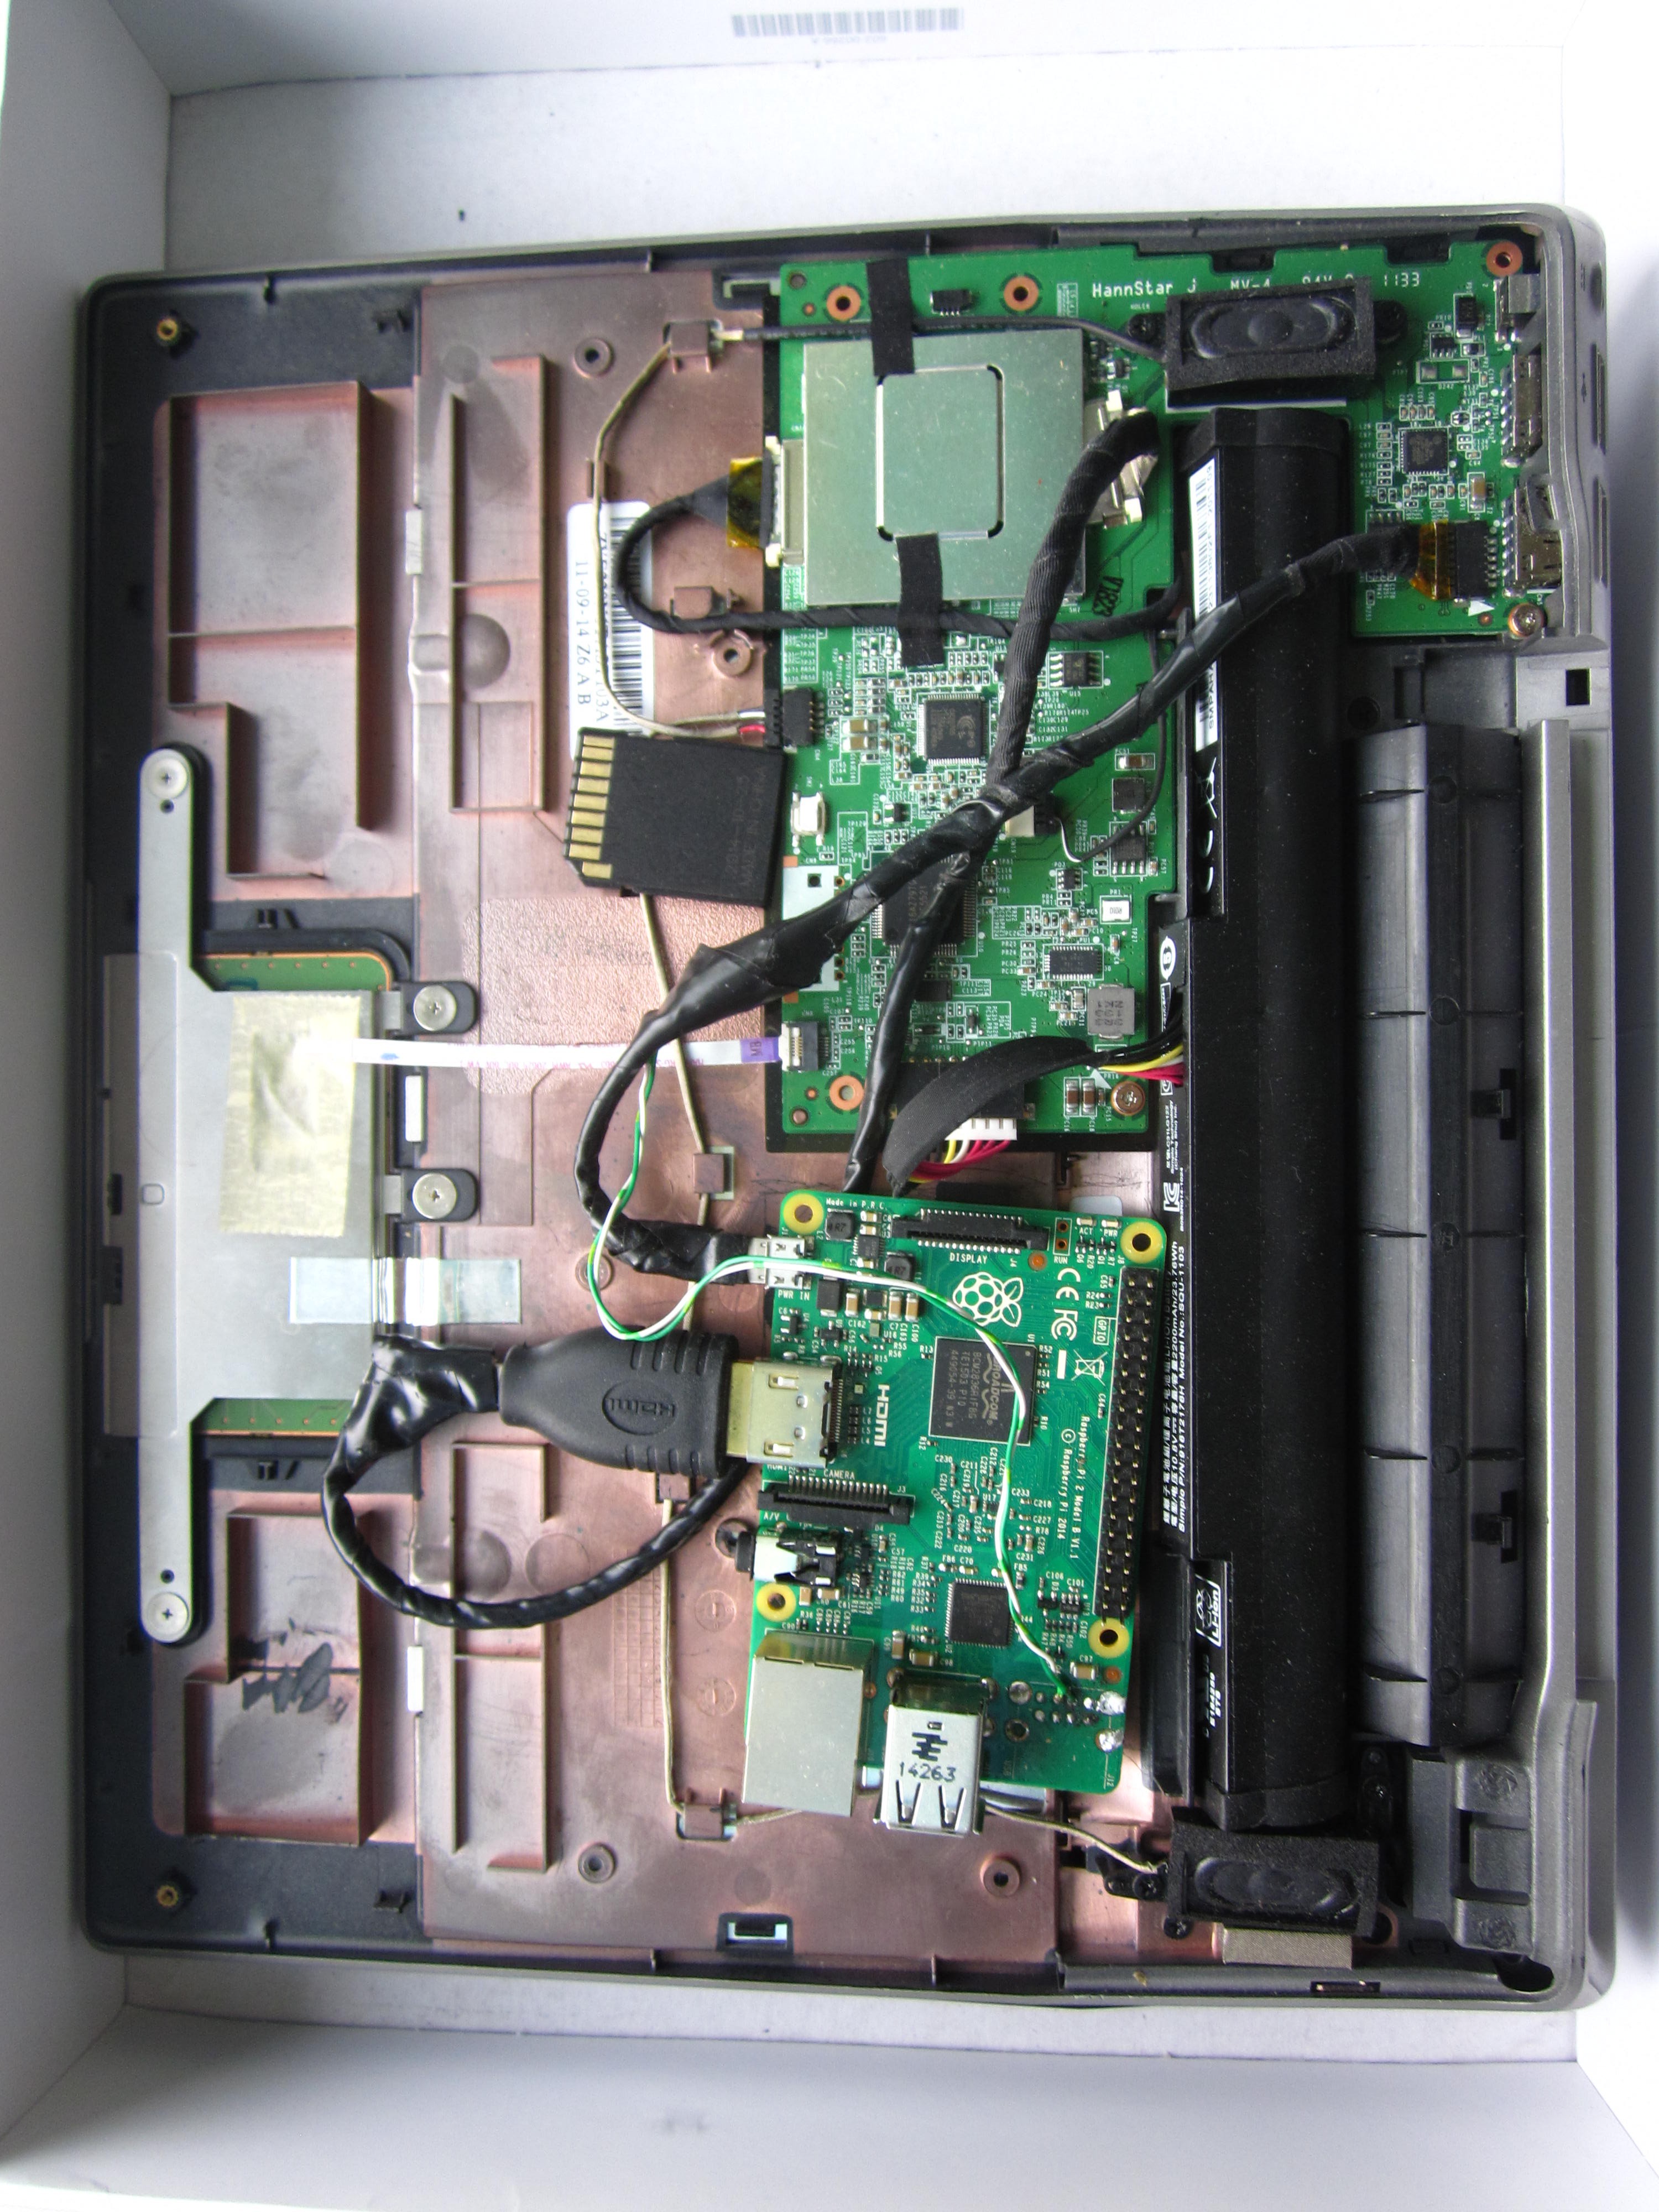 Gallery Raspberry Pi Laptop Using A Lapdock Hackaday Io